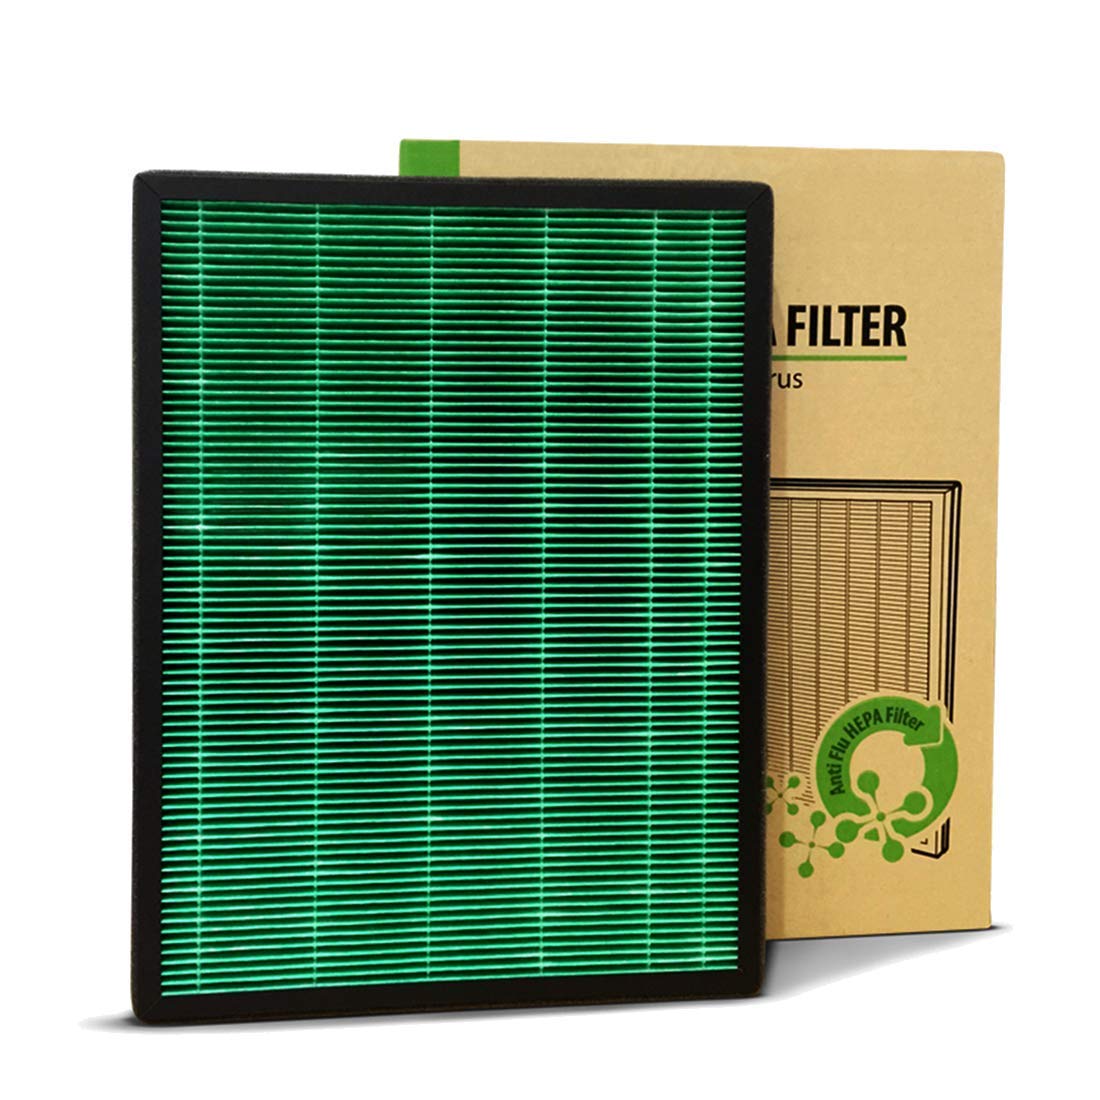 Coway Filter for Air Purifier, Longest Filter Life 8500 Hrs, Green True HEPA Filter, Traps 99.99% Virus & PM 0.1 Particles (HEPA Filter (AirMega 150 | AP-1019C))